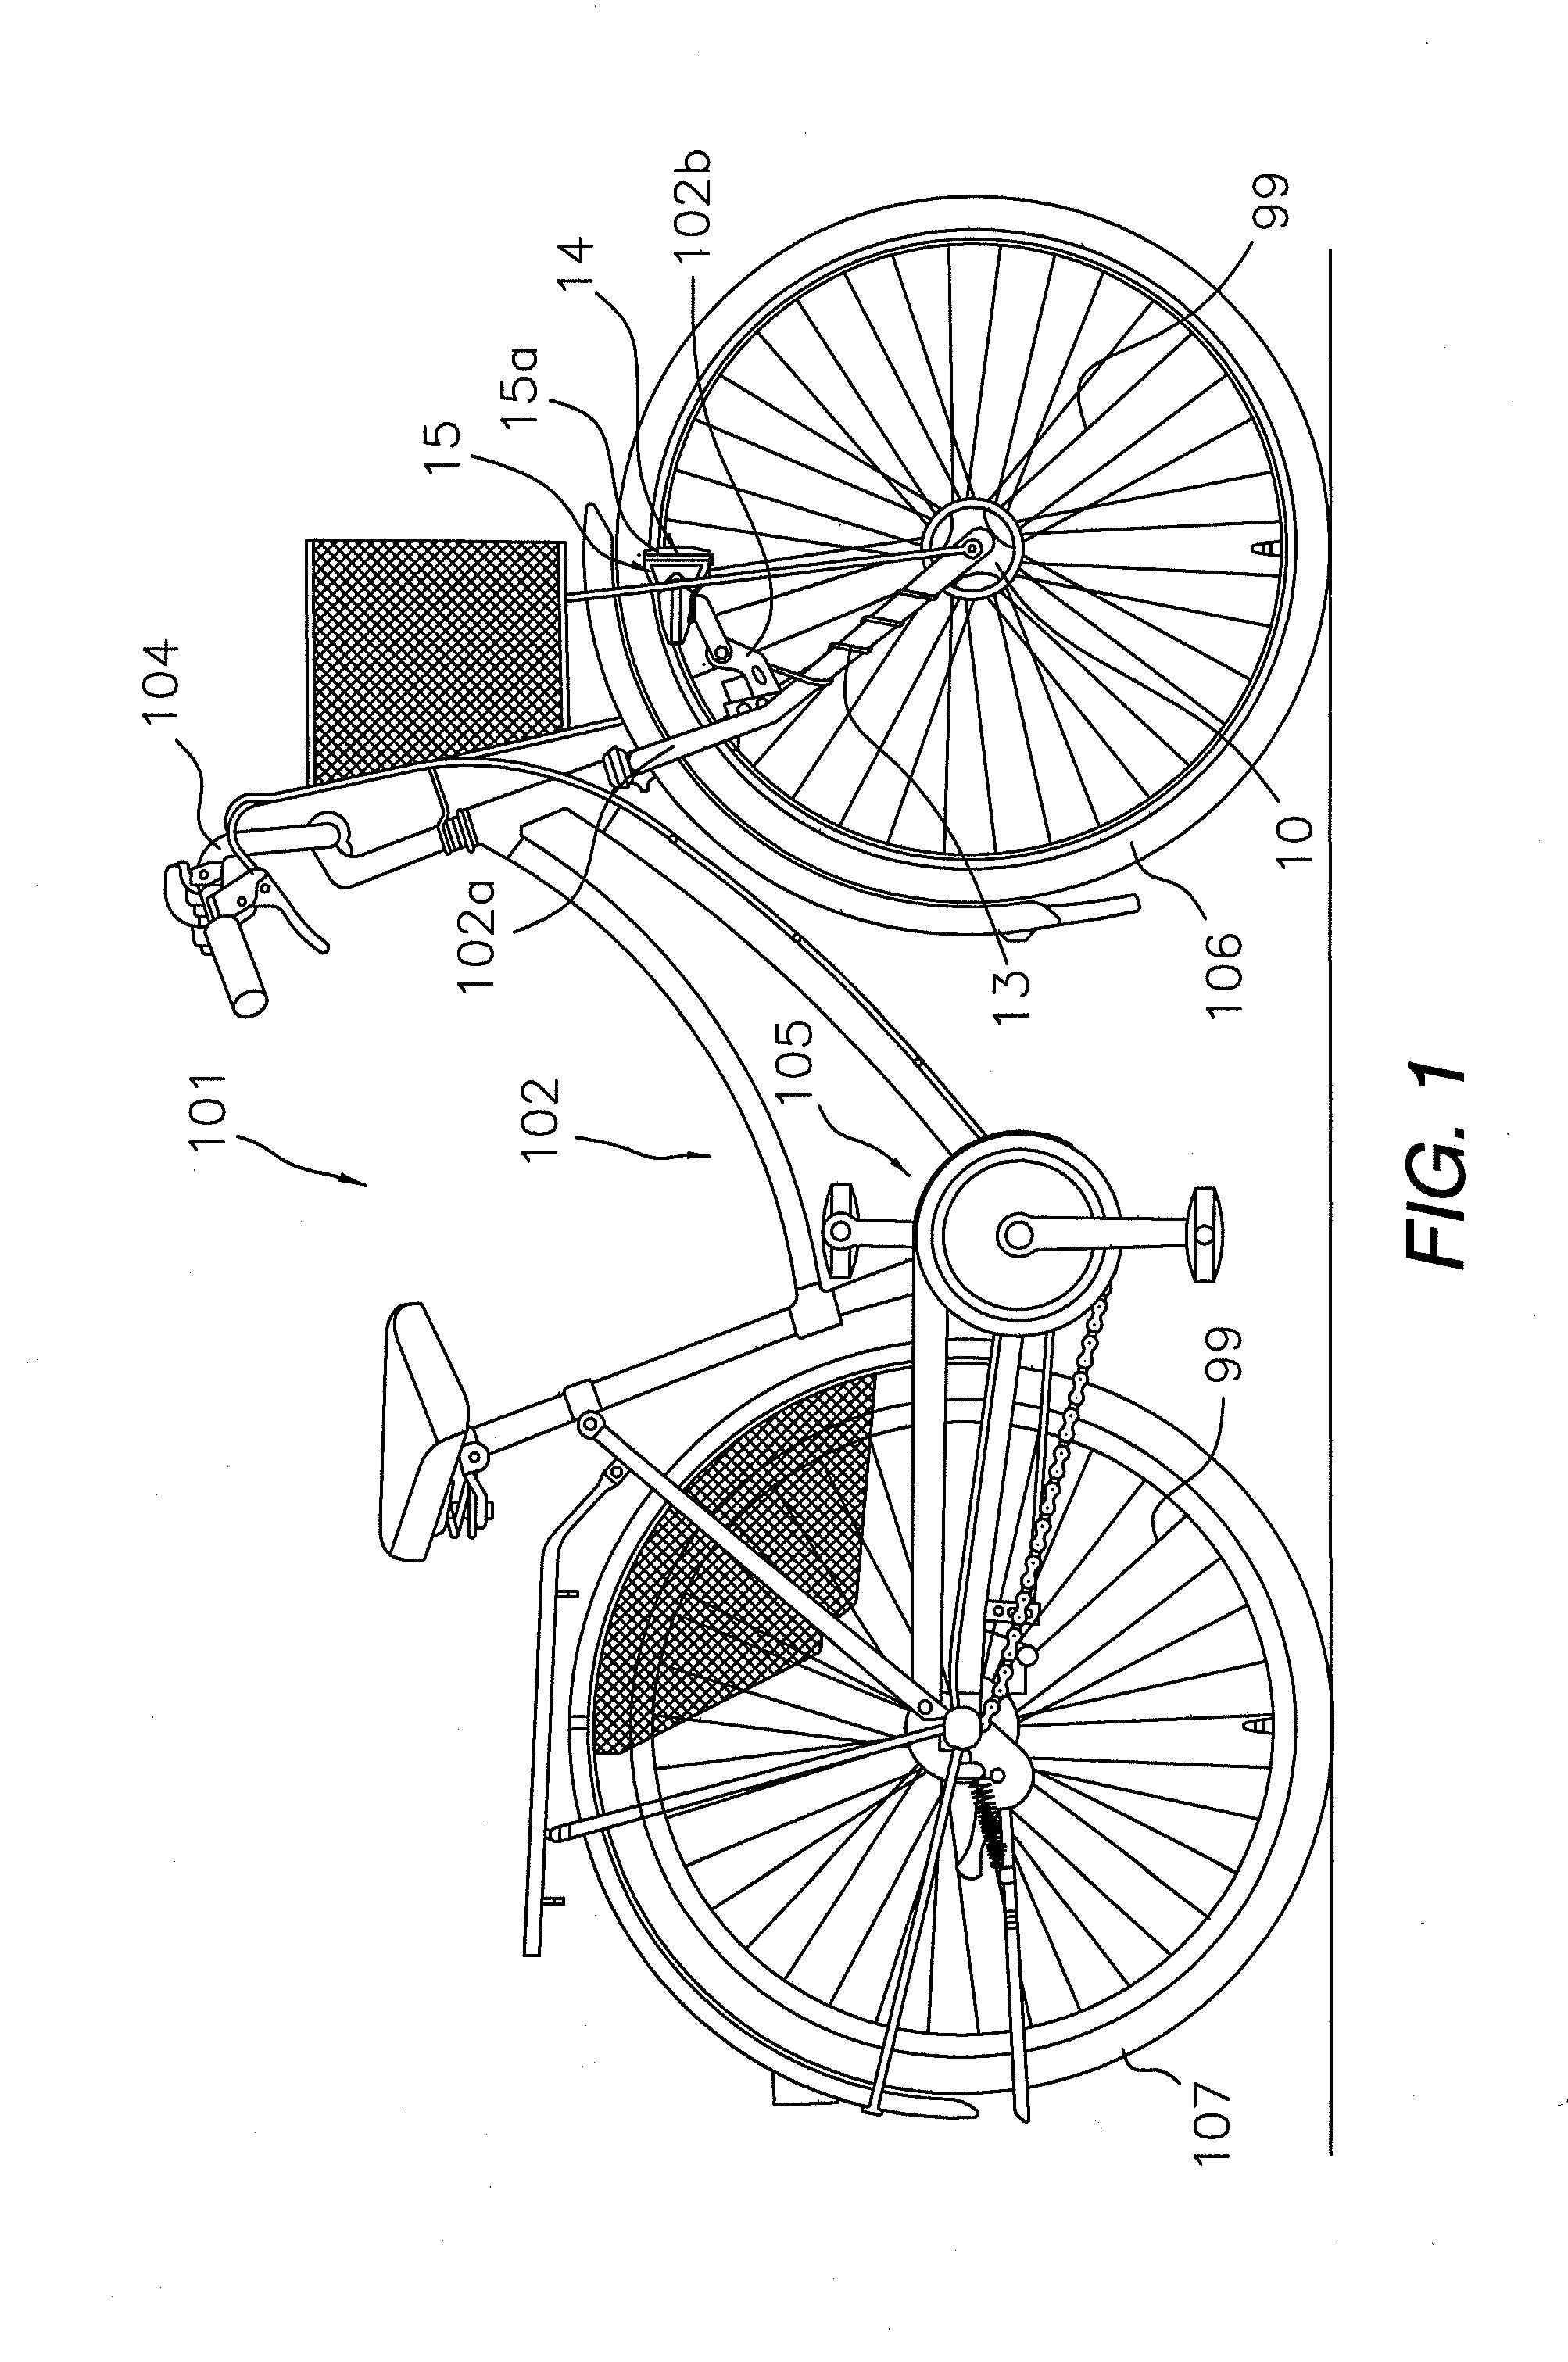 Bicycle electric generator